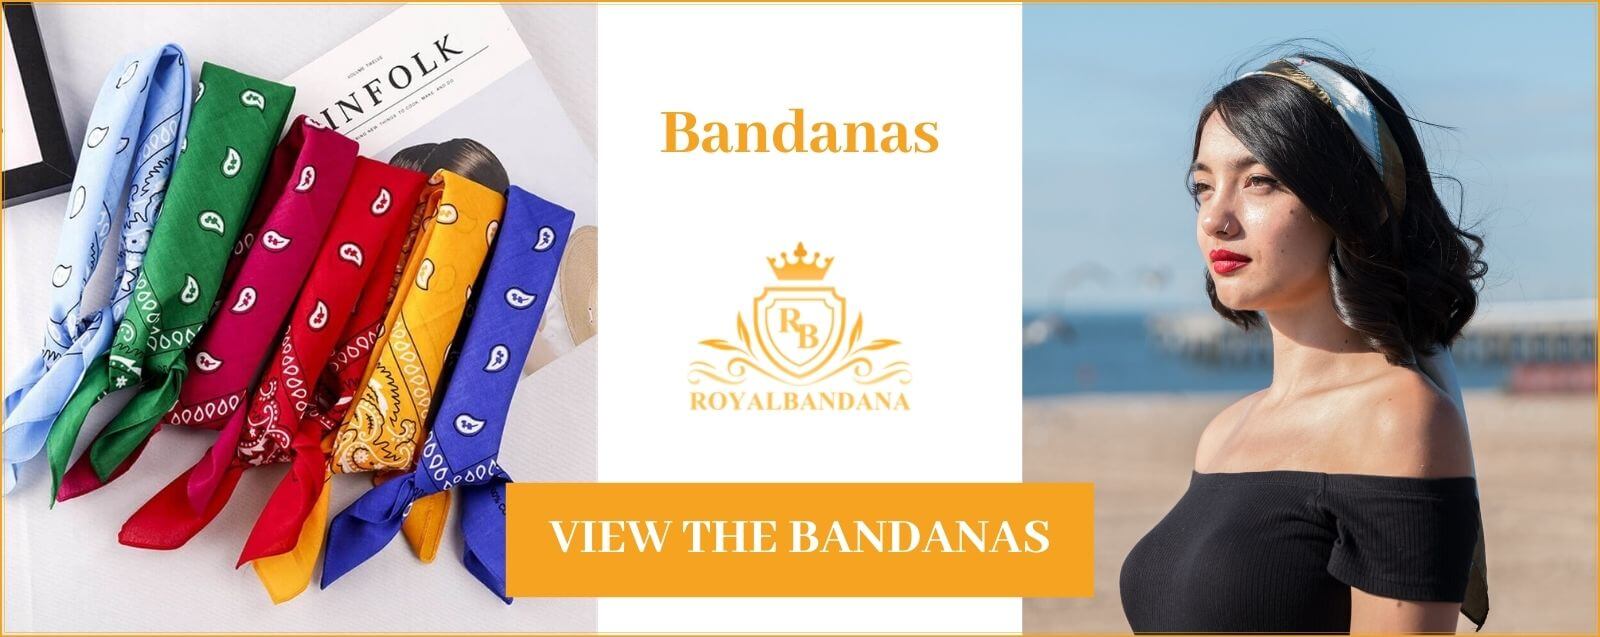 see-bandana-royalbandana-woman